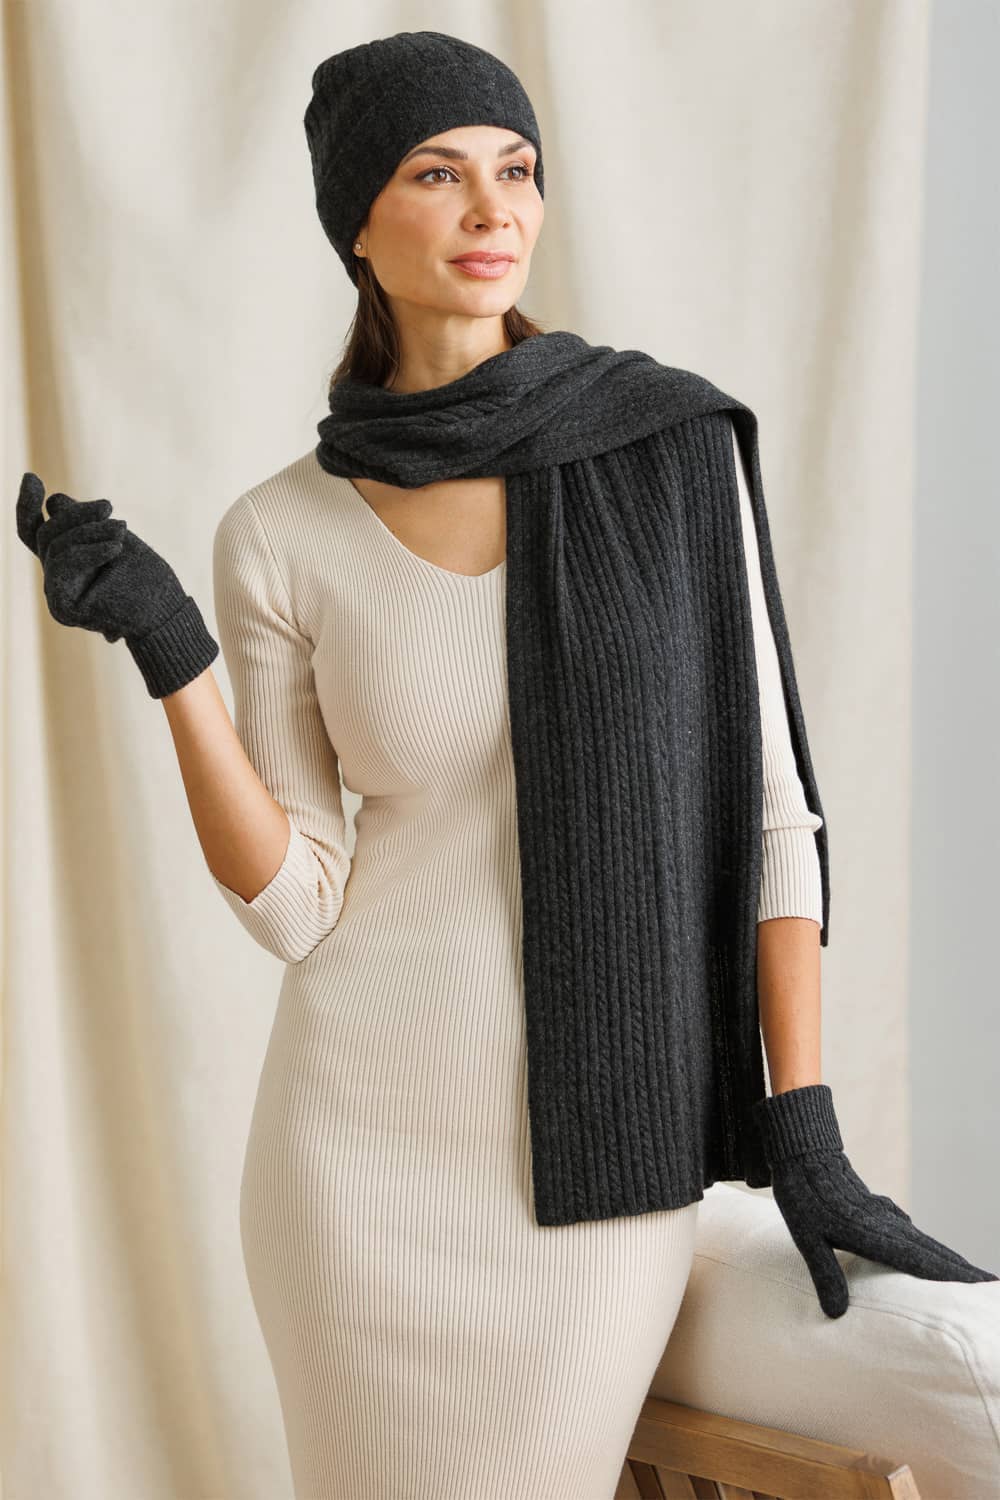 Hat Scarf Gloves Set for Women 100% Cashmere Grey